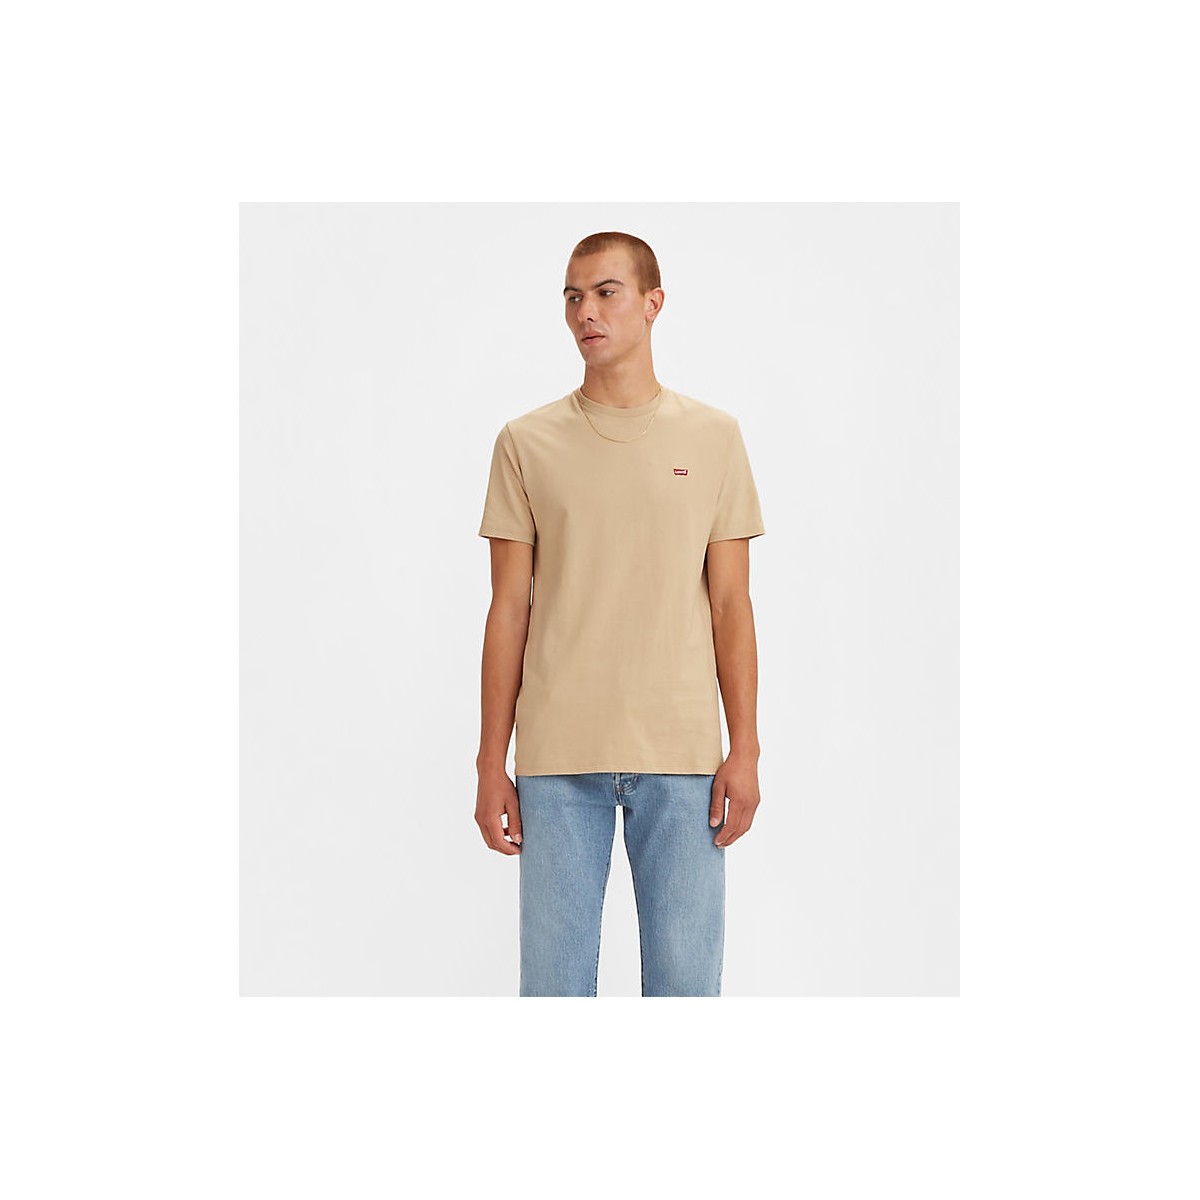 Levi's - T-shirt beige